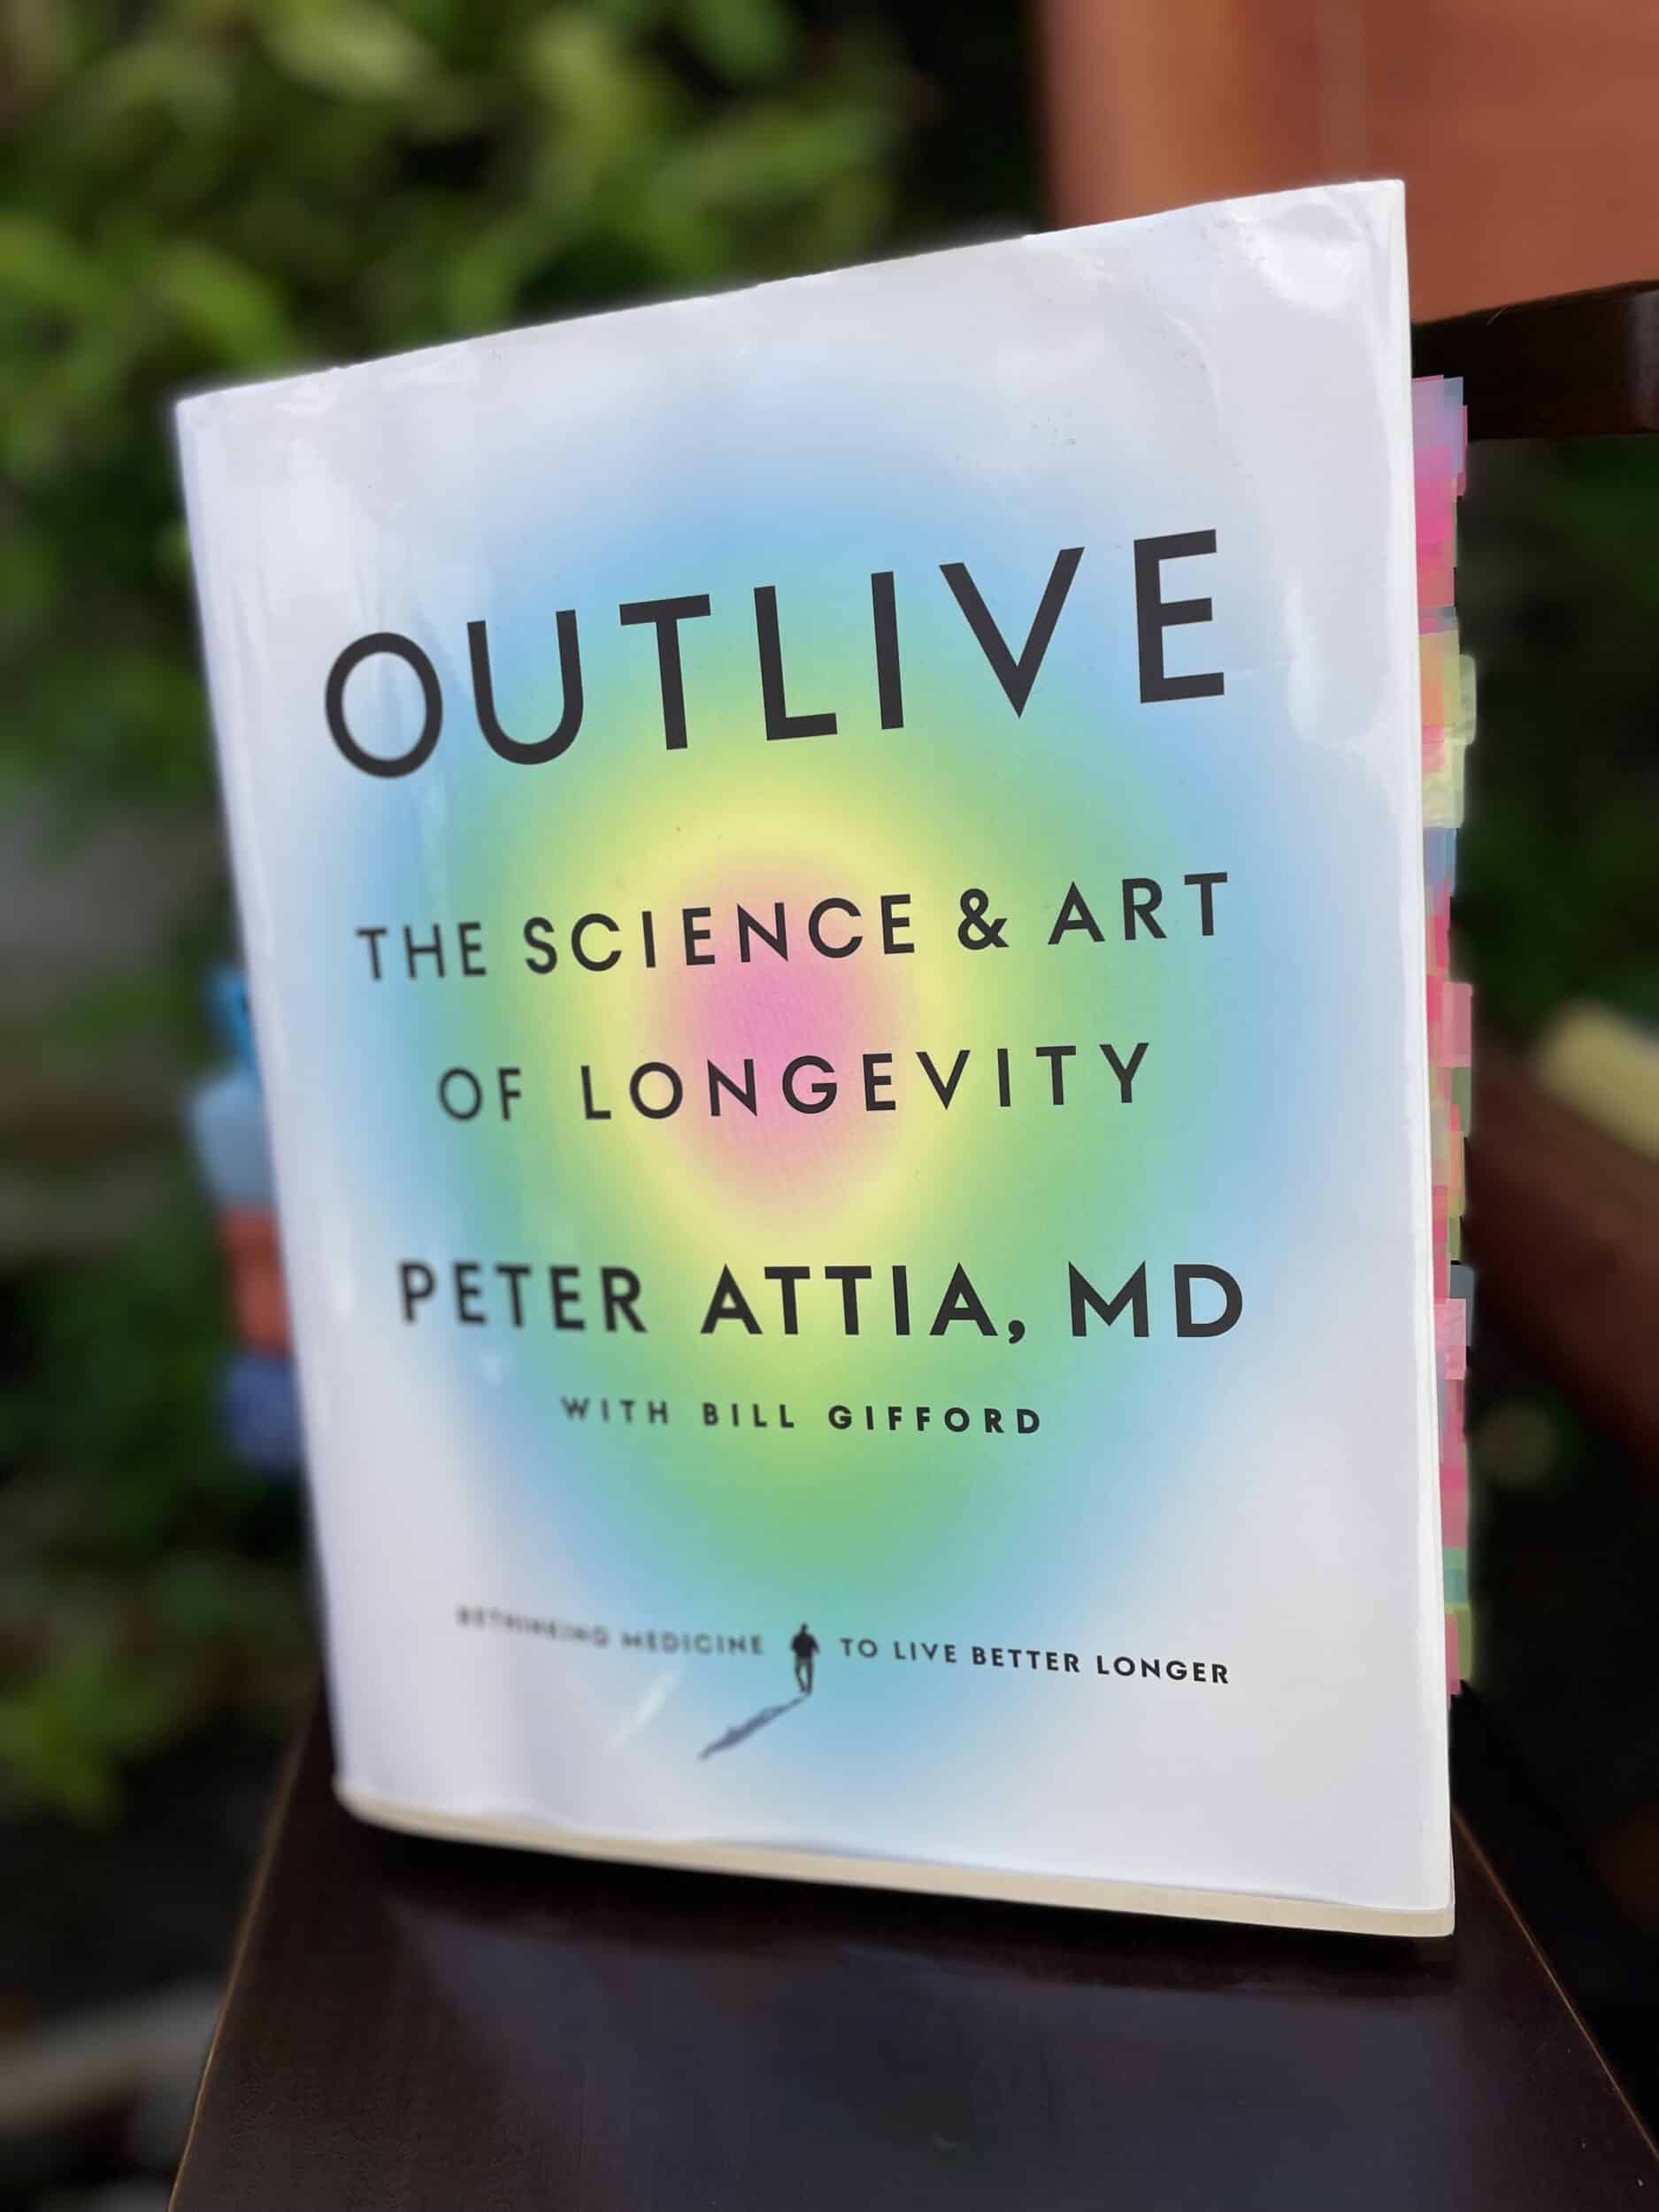 The Science & Art of Longevity